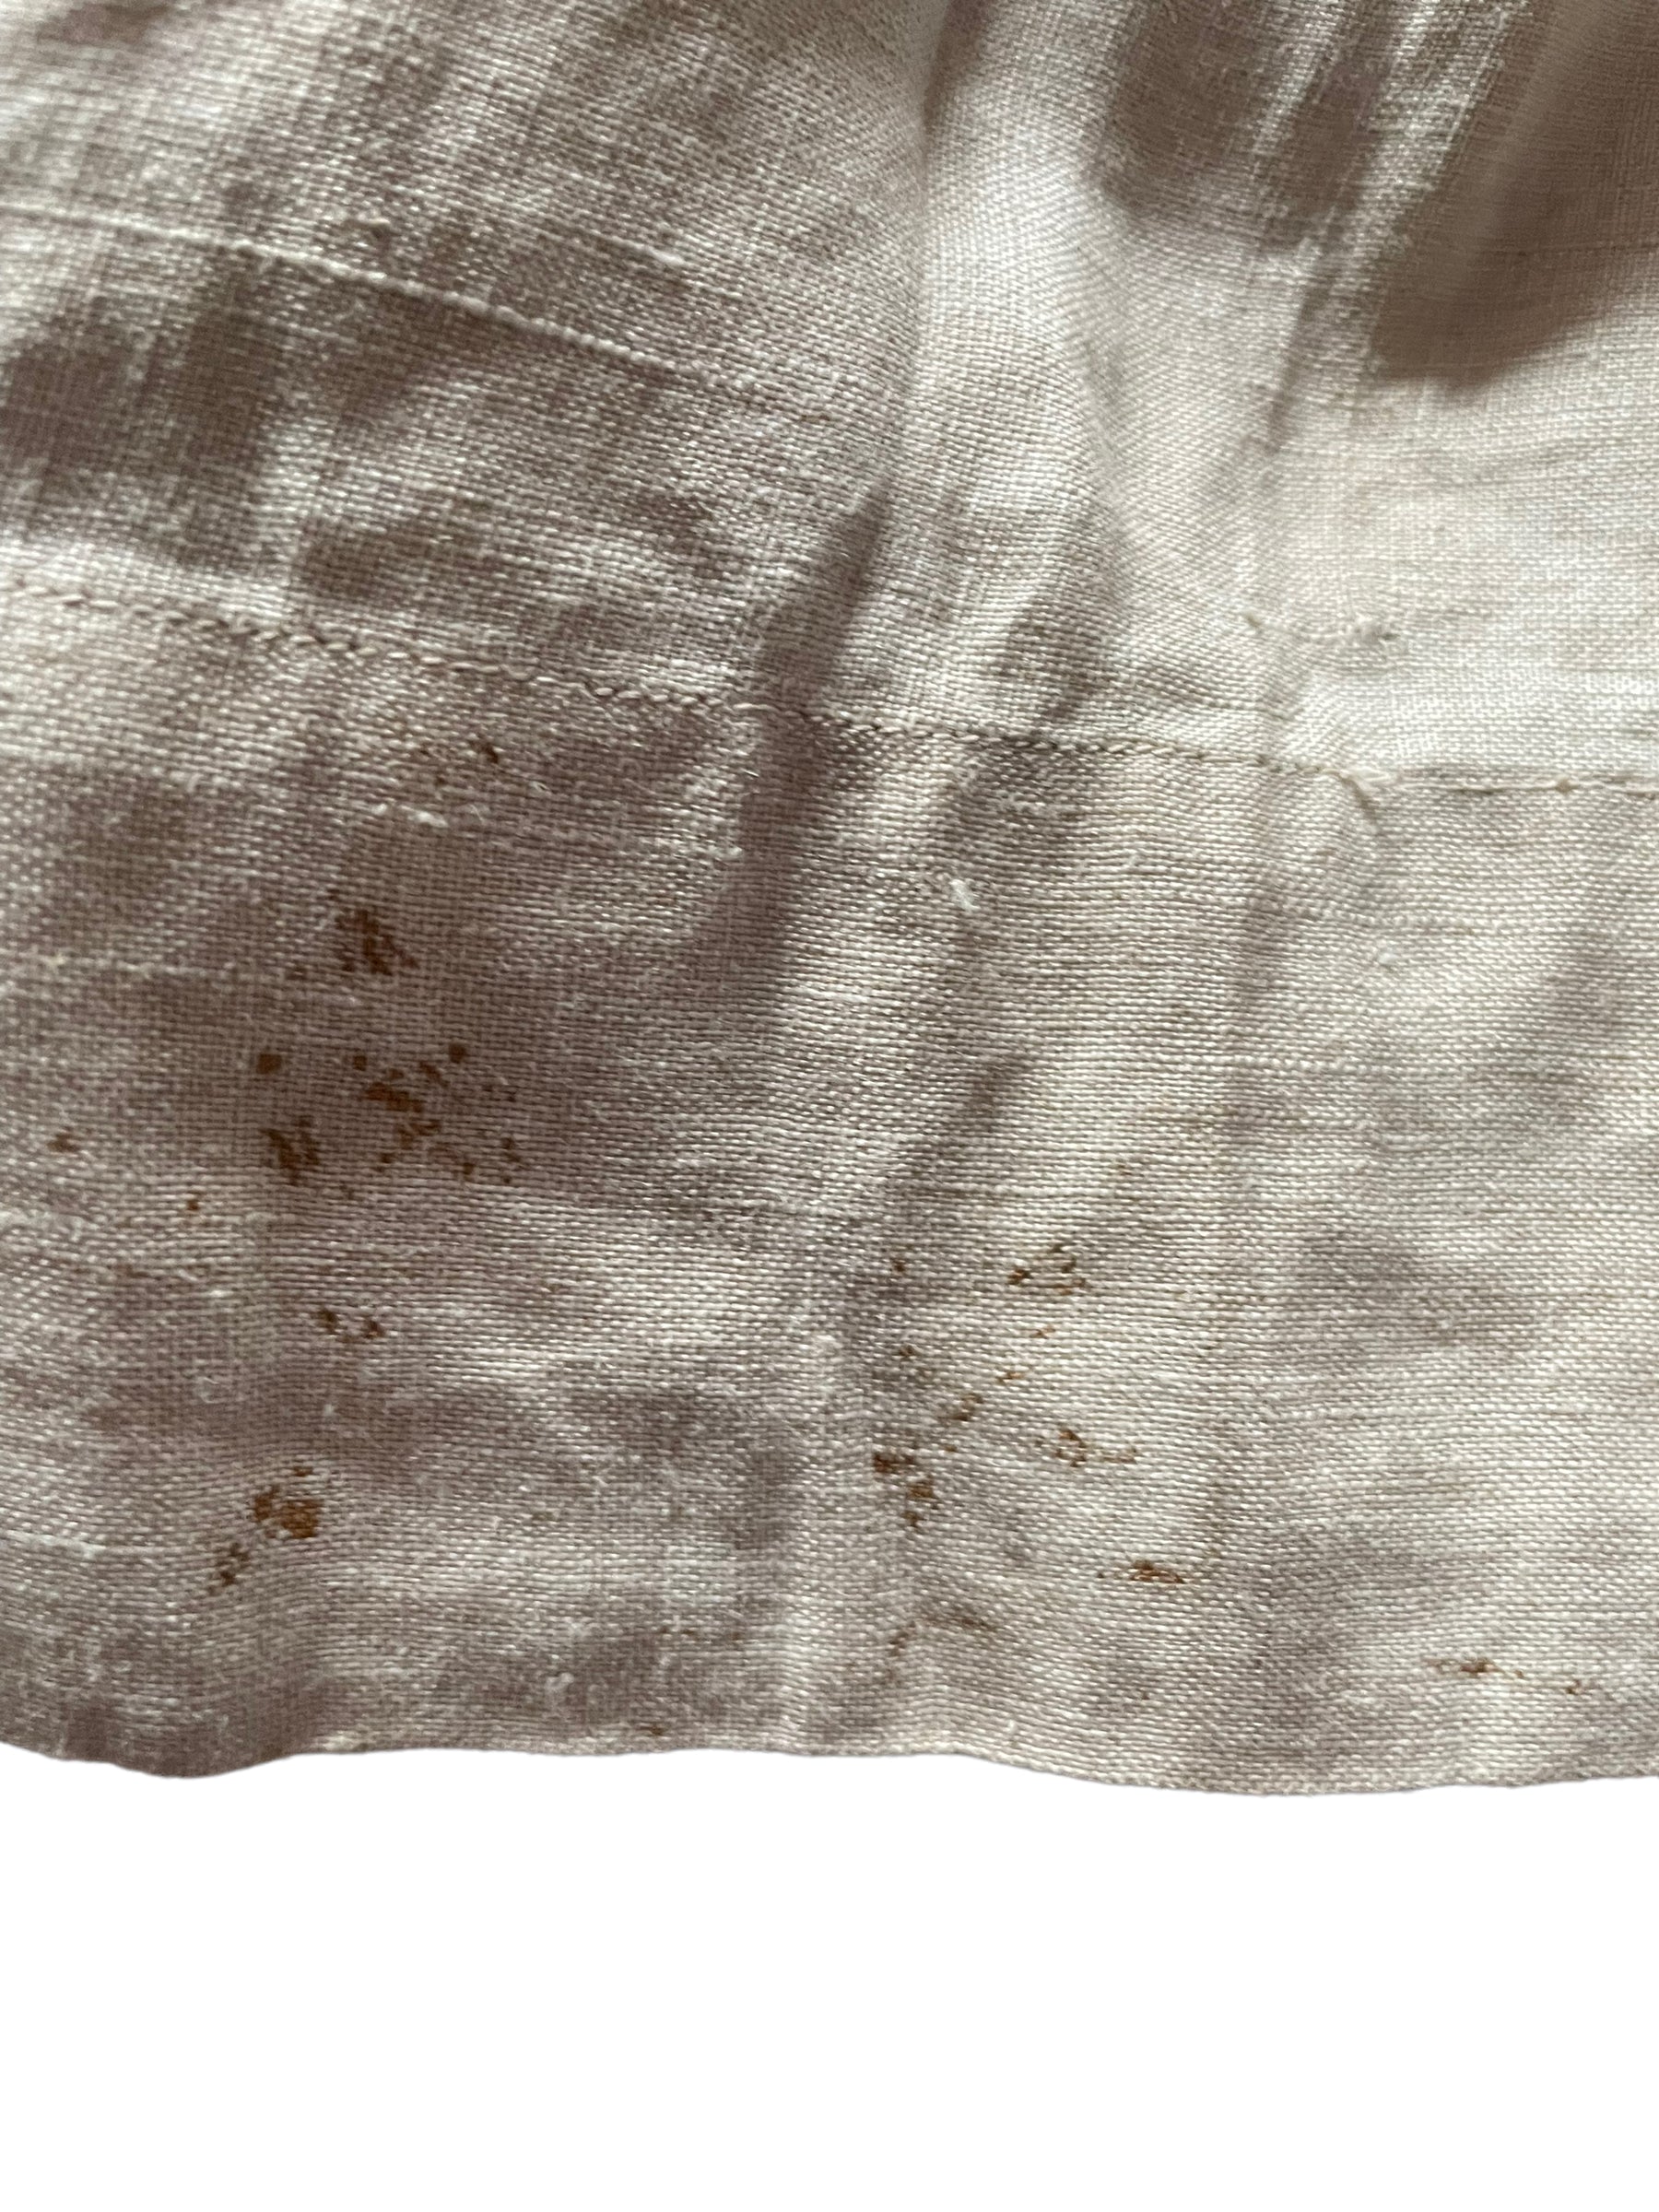 Stains along hem Antique Early 1900s Linen Dress SZ XSClose up of stains along hem Antique Early 1900s Linen Dress SZ XS